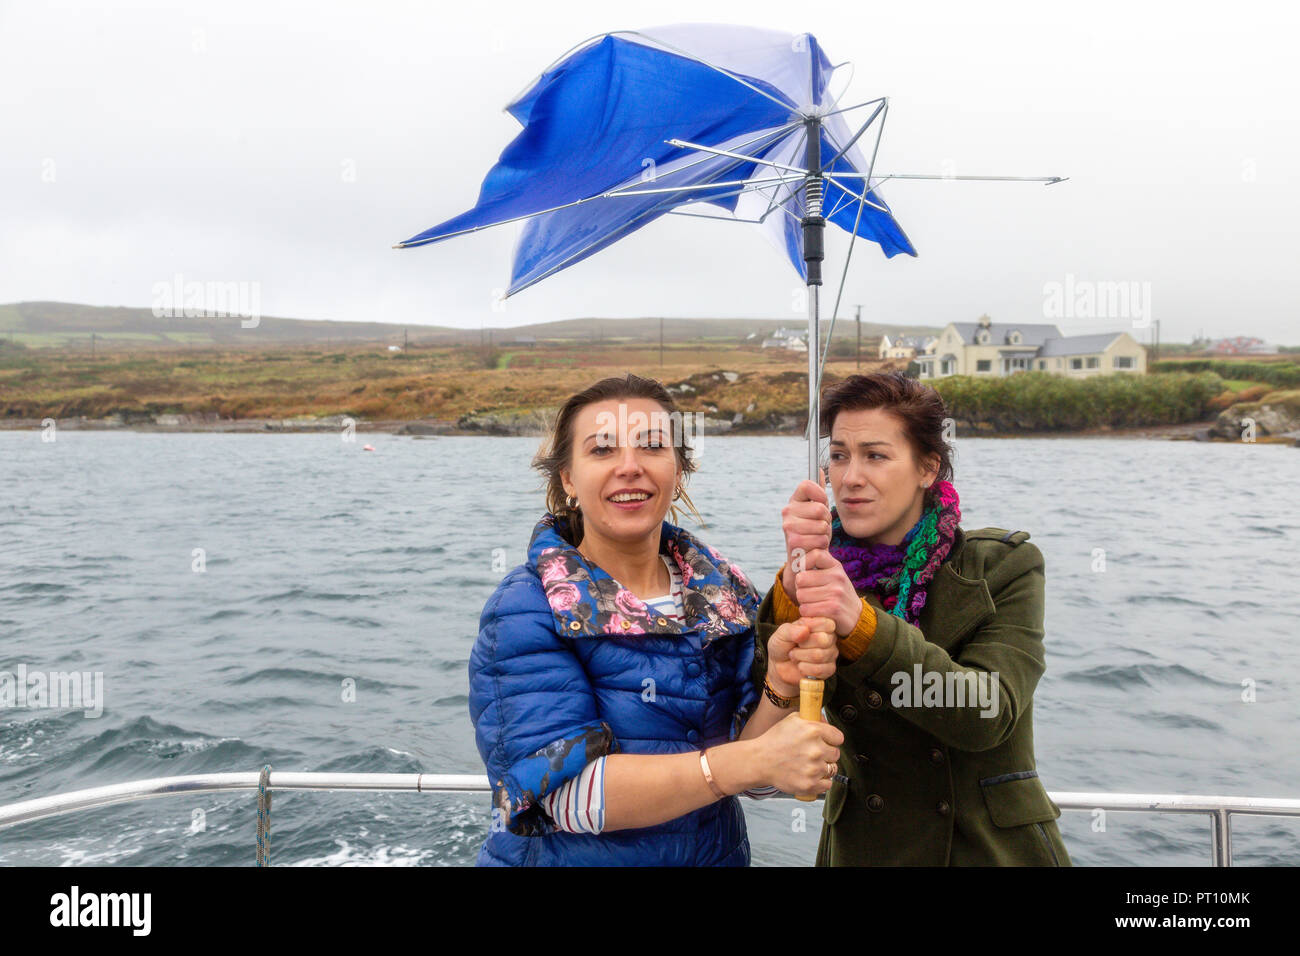 Two women with broken umbrella, Ireland Stock Photo